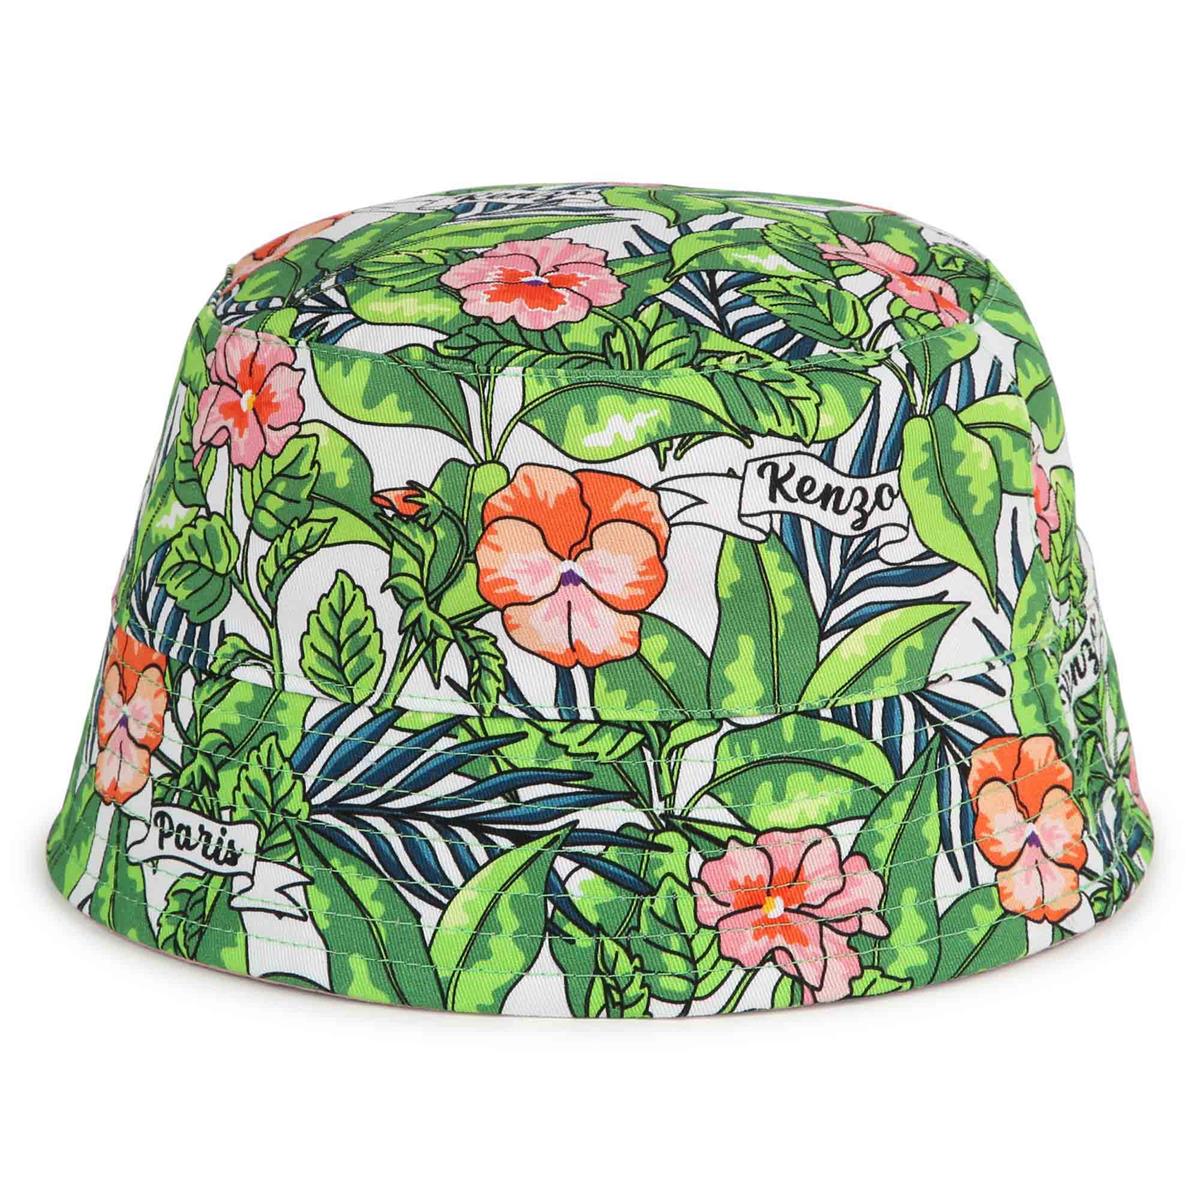 Boys & Girls Pink Reversible Bucket Hat